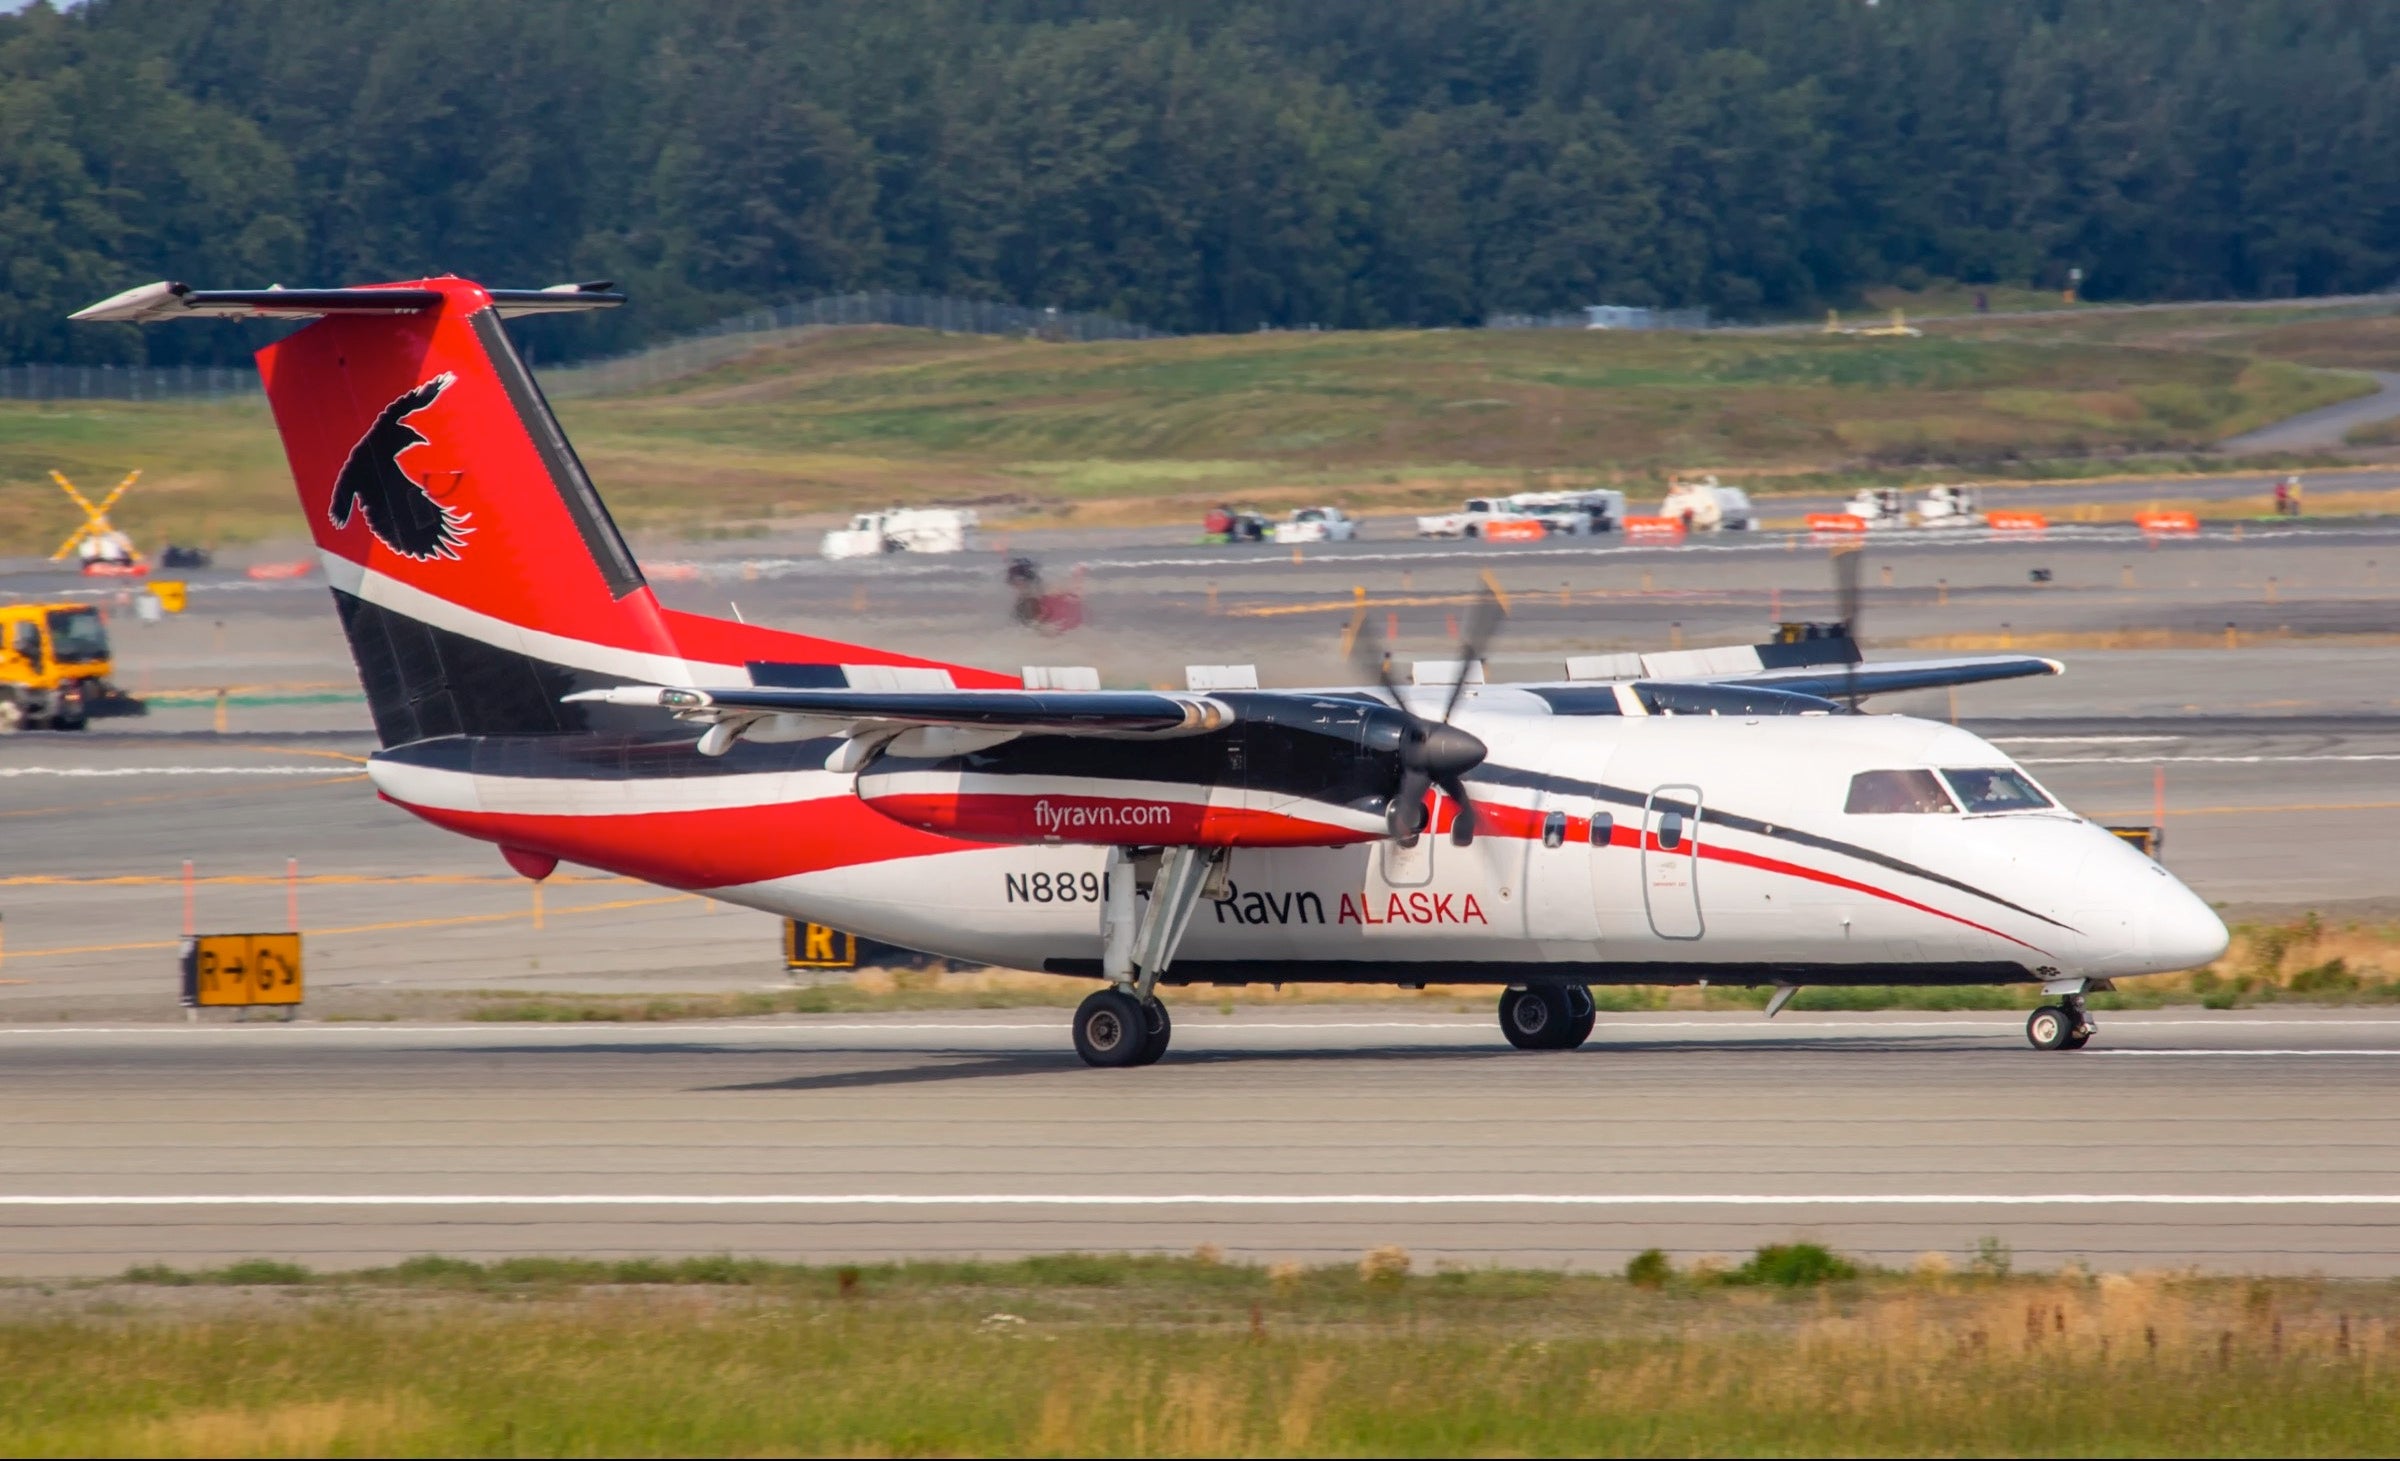 Ravn Alaska plane on the runway